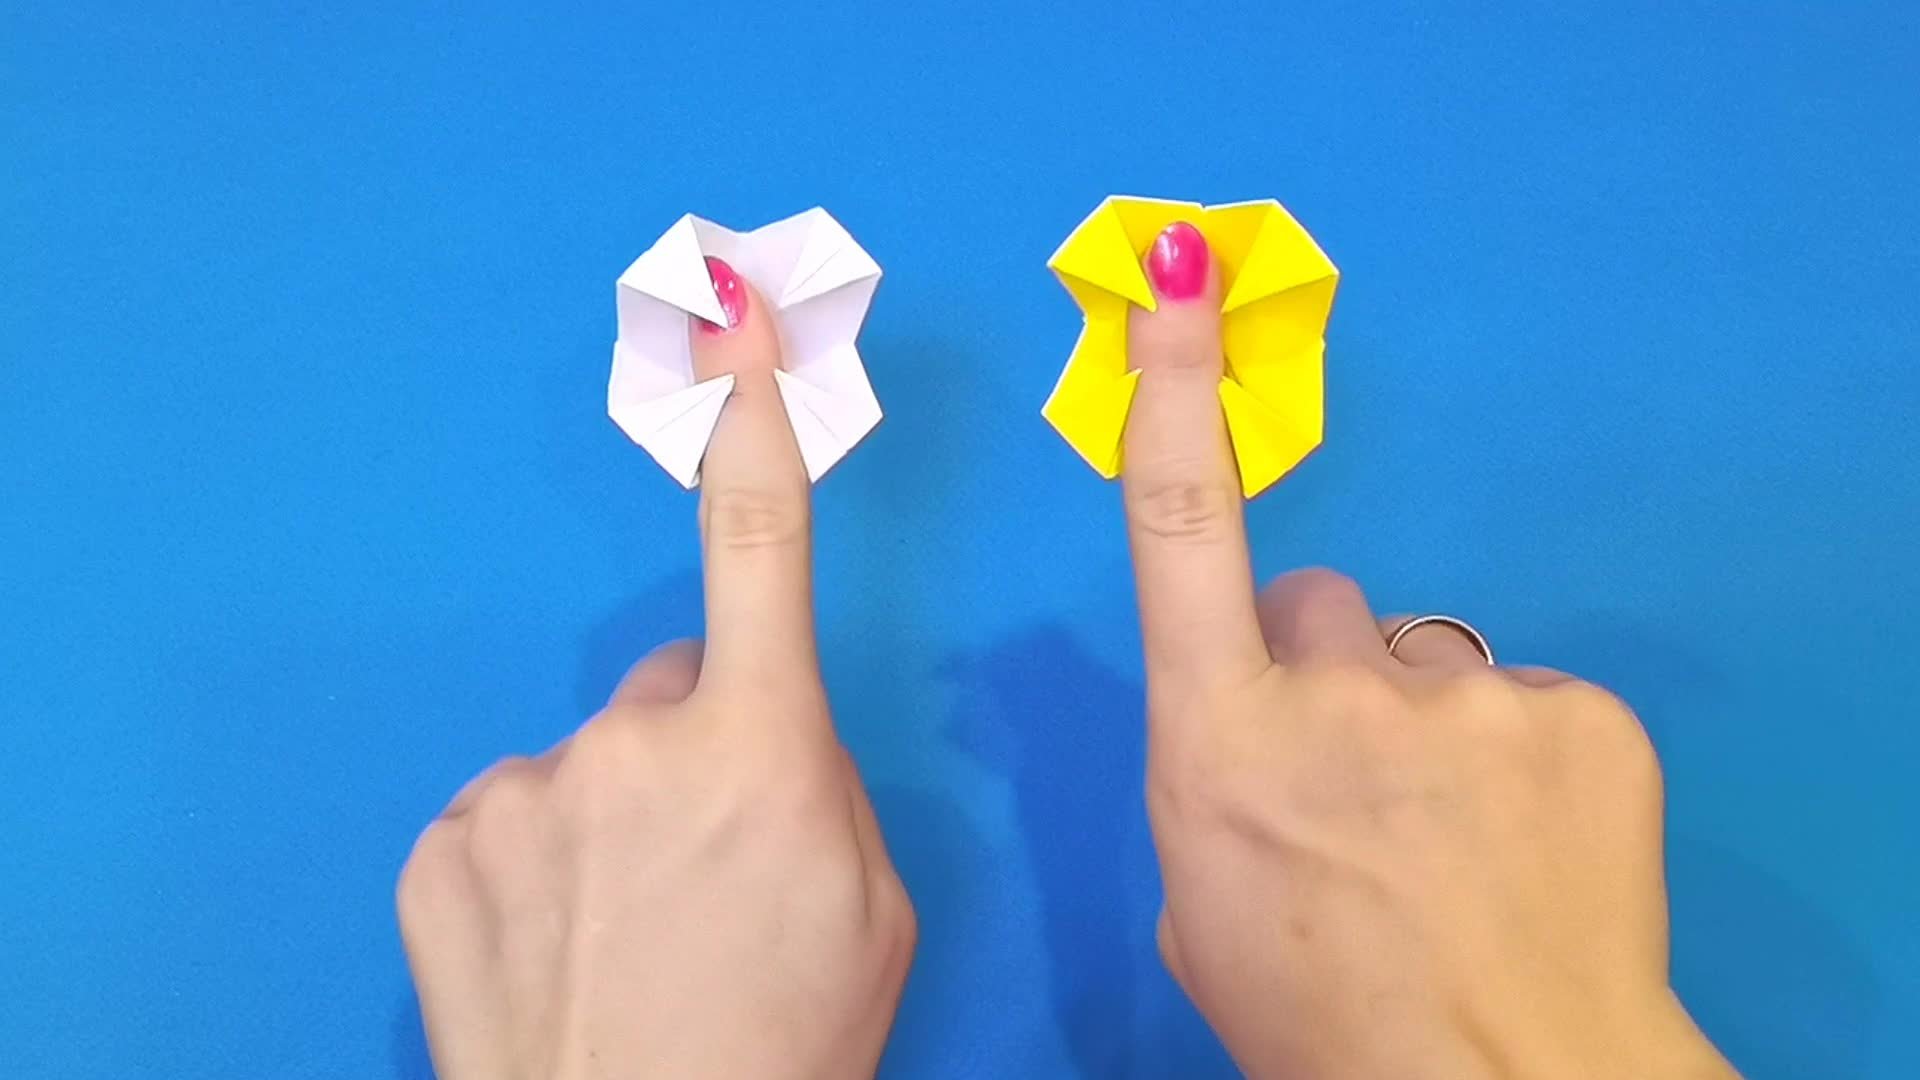 Антистресс как сделать своими руками из бумаги. Оригами. Оригами игрушка антистресс. А̊н̊т̊и̊с̊т̊р̊е̊с̊ы̊ и̊з̊ б̊у̊м̊а̊г̊и̊. Антистресс из бумаги для детей.